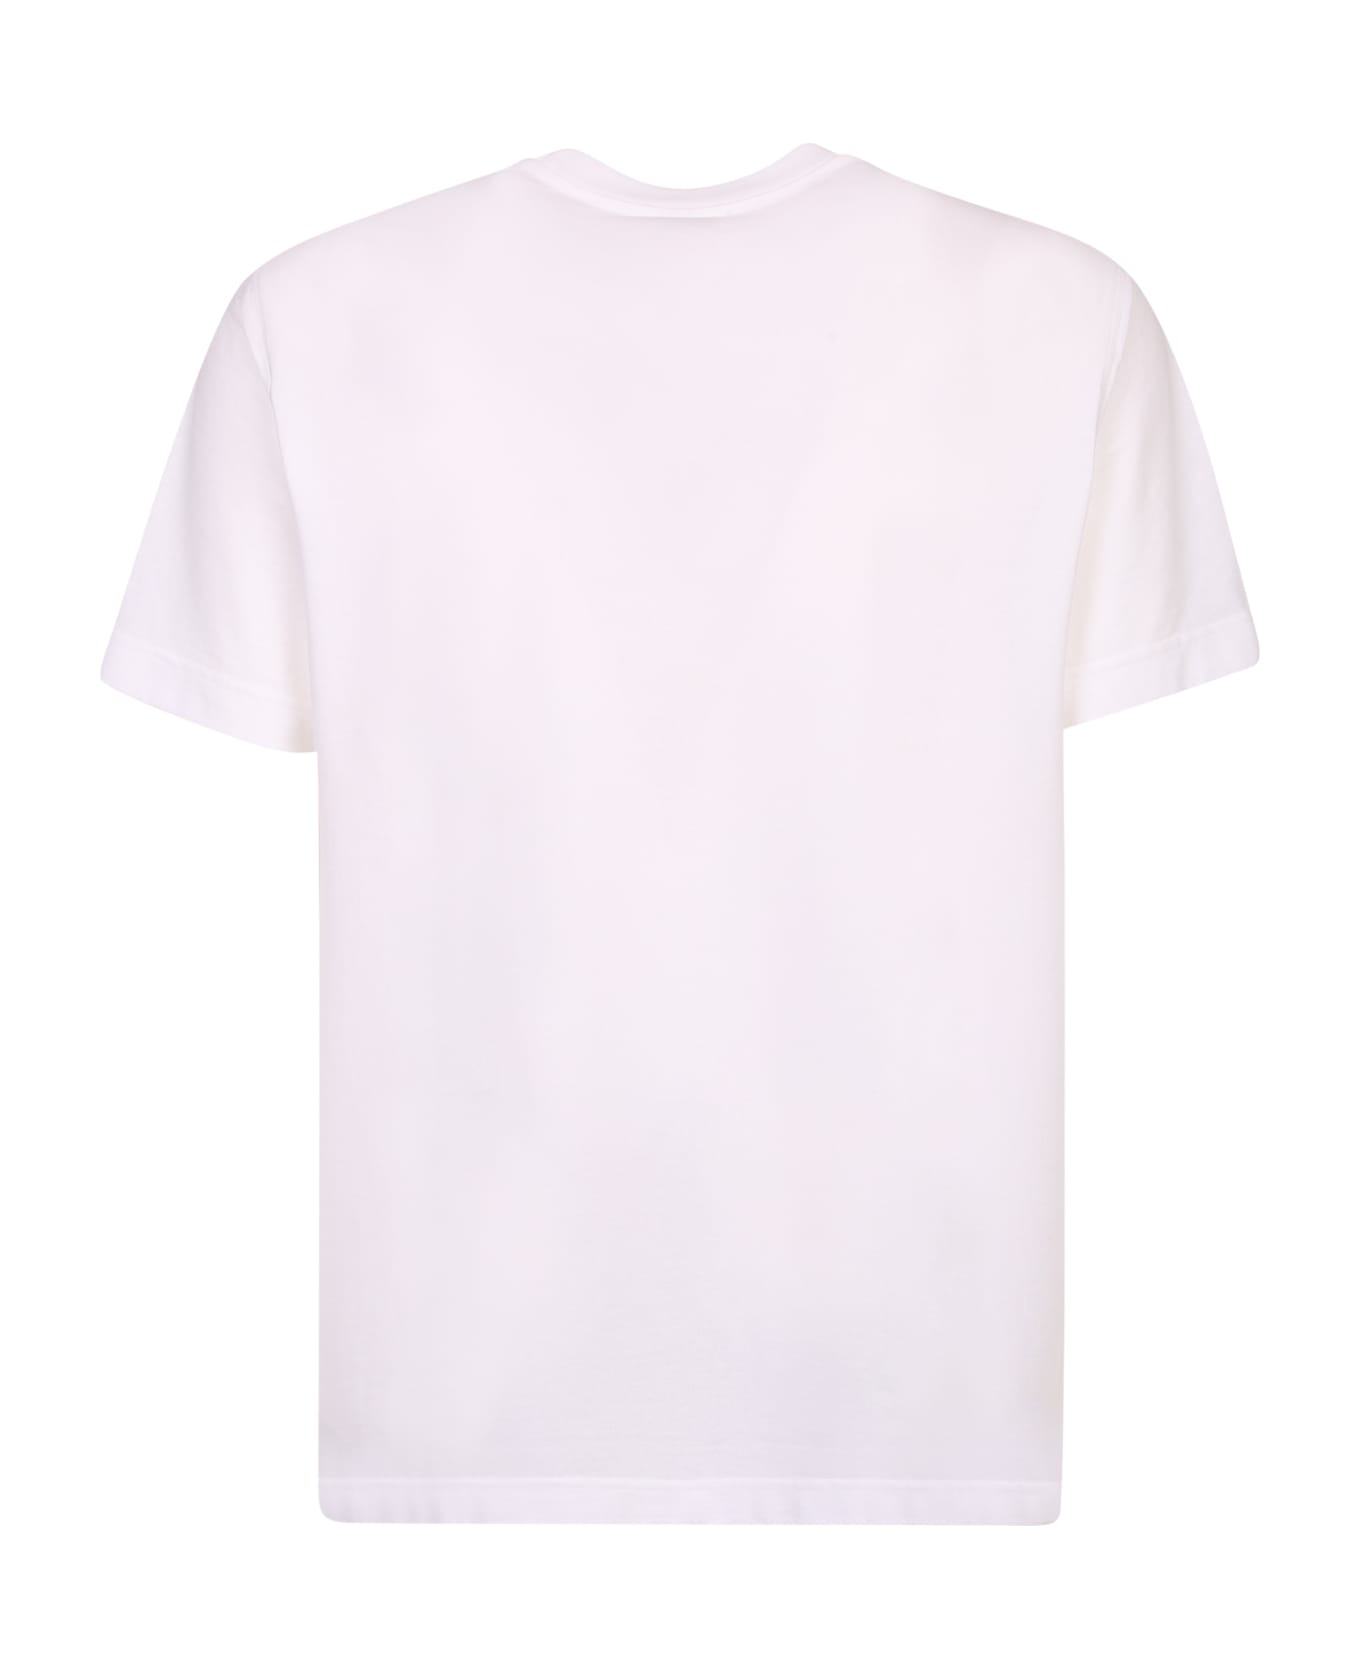 Zanone Patch T-shirt - White シャツ